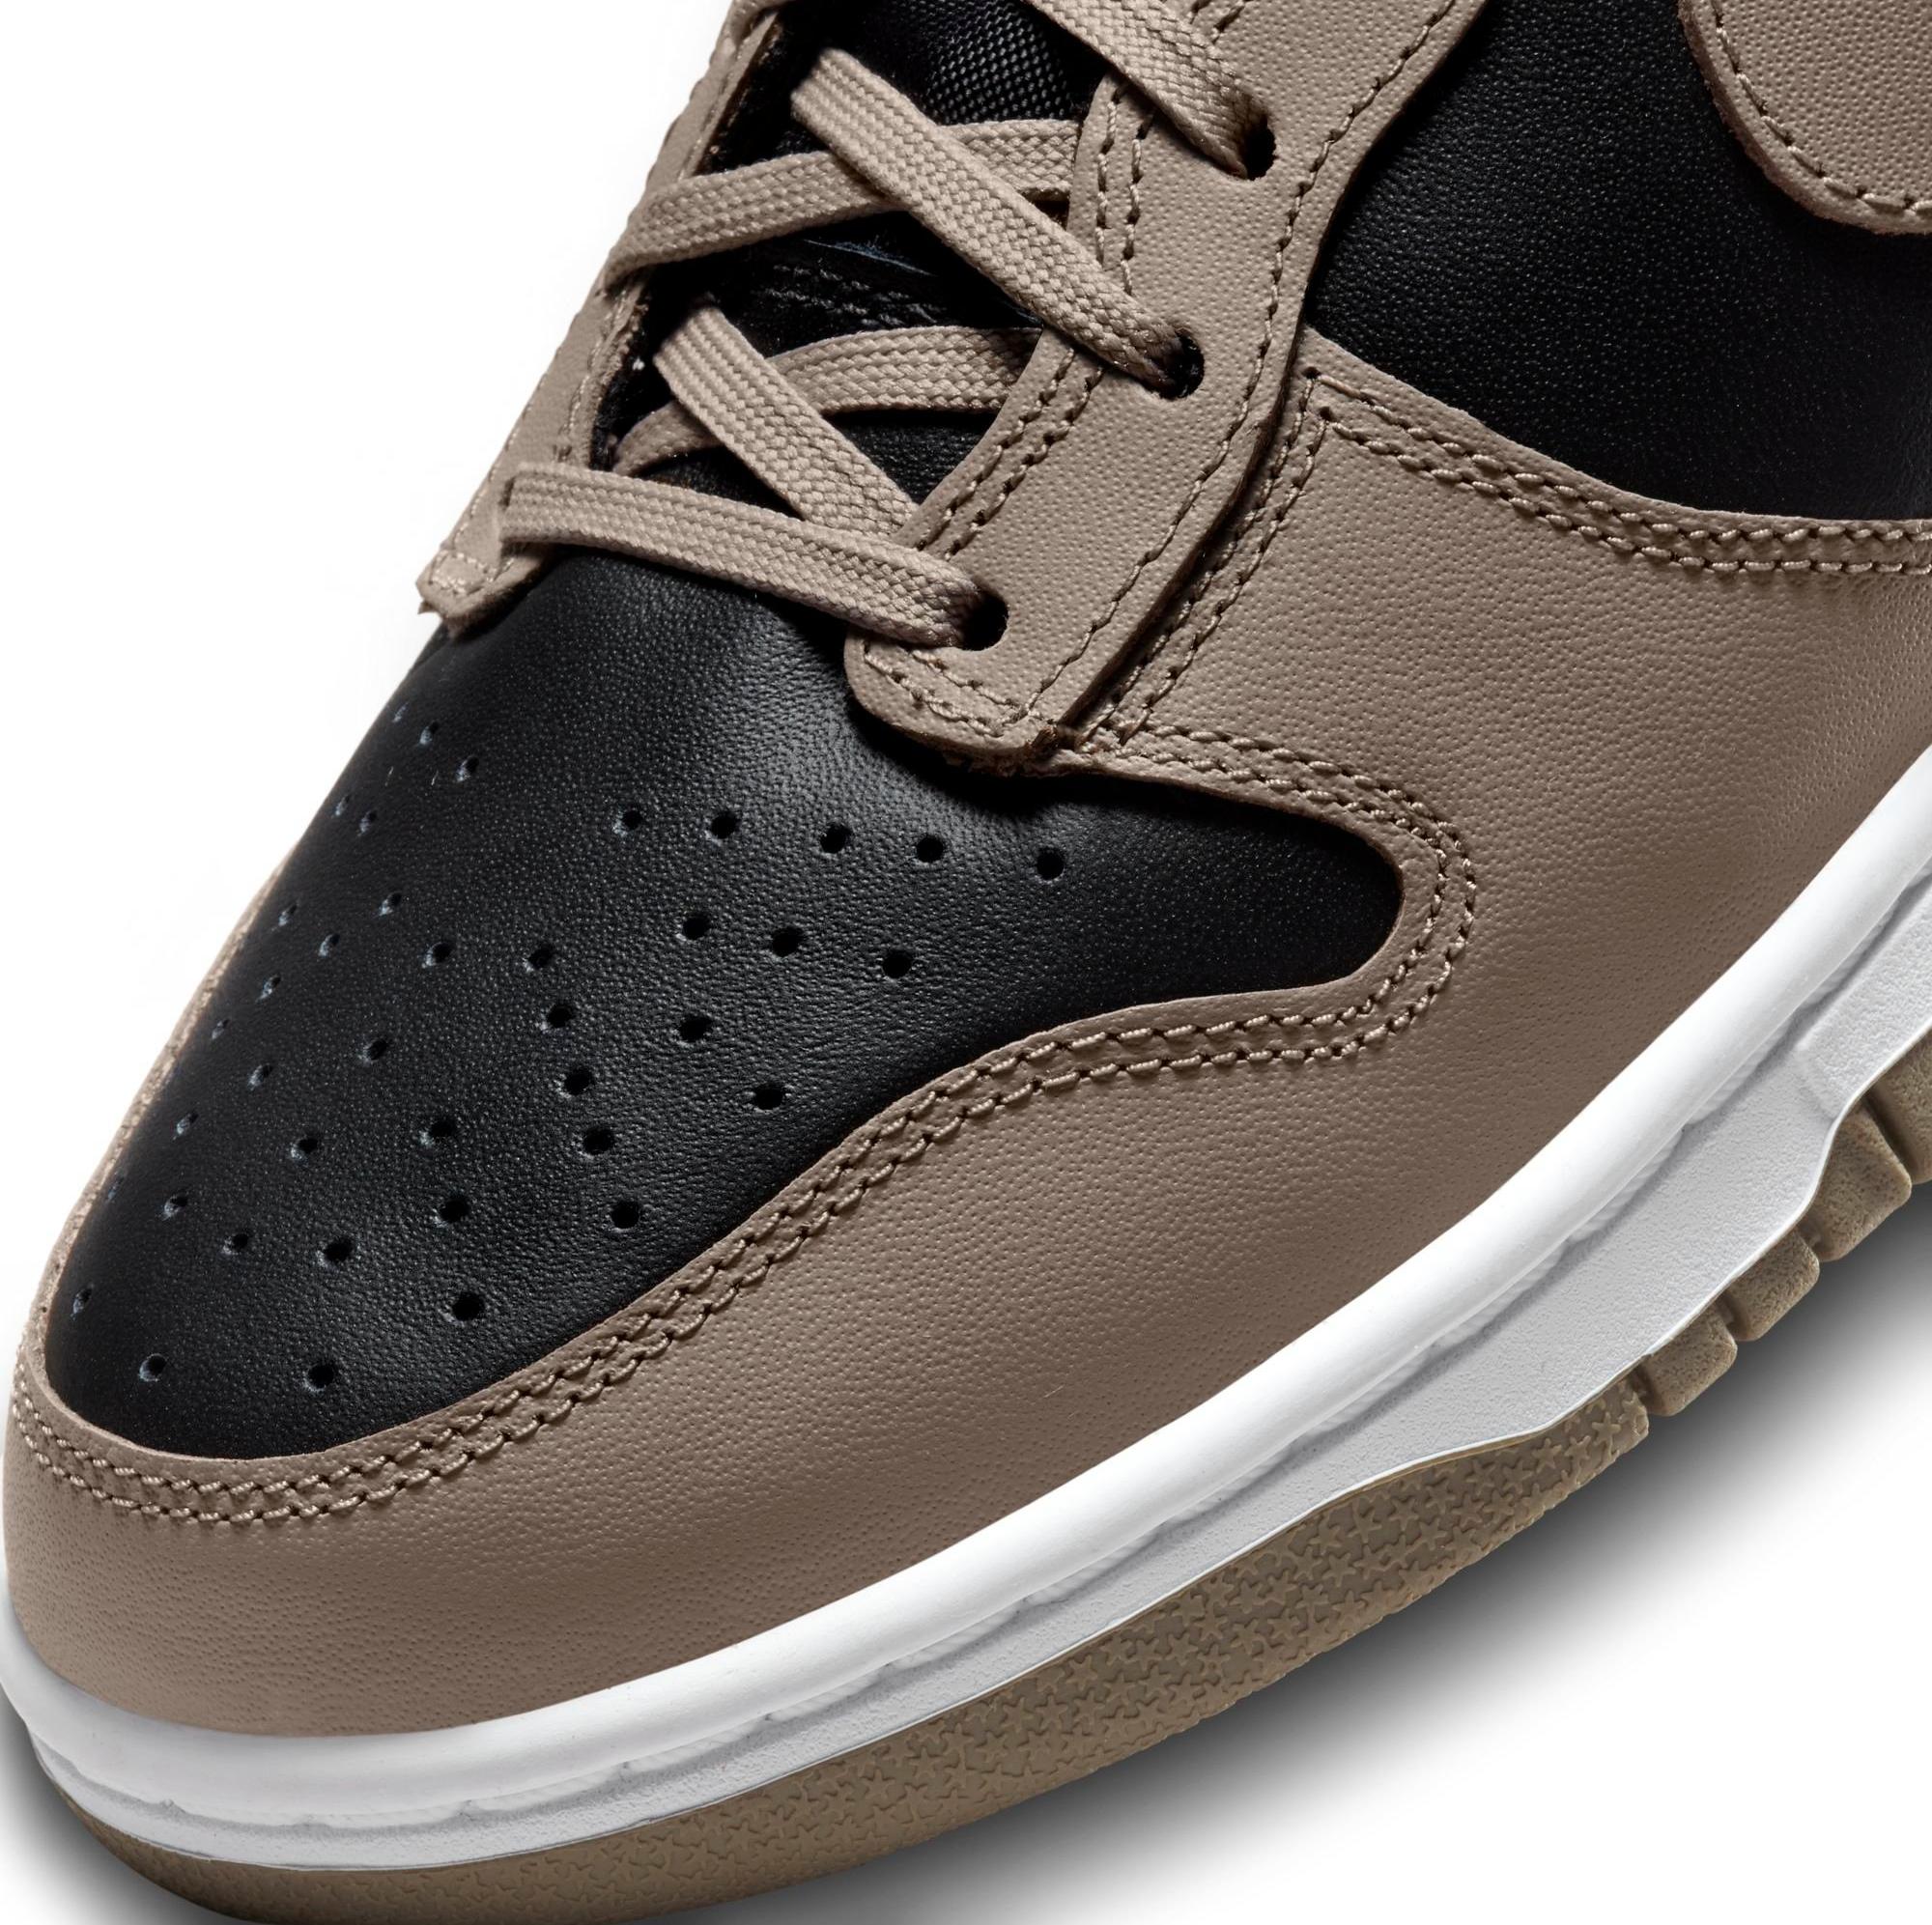 Sneakers Release – Nike Dunk High “Black/Moon Fossil”  Women’s Shoe Launching 12/28